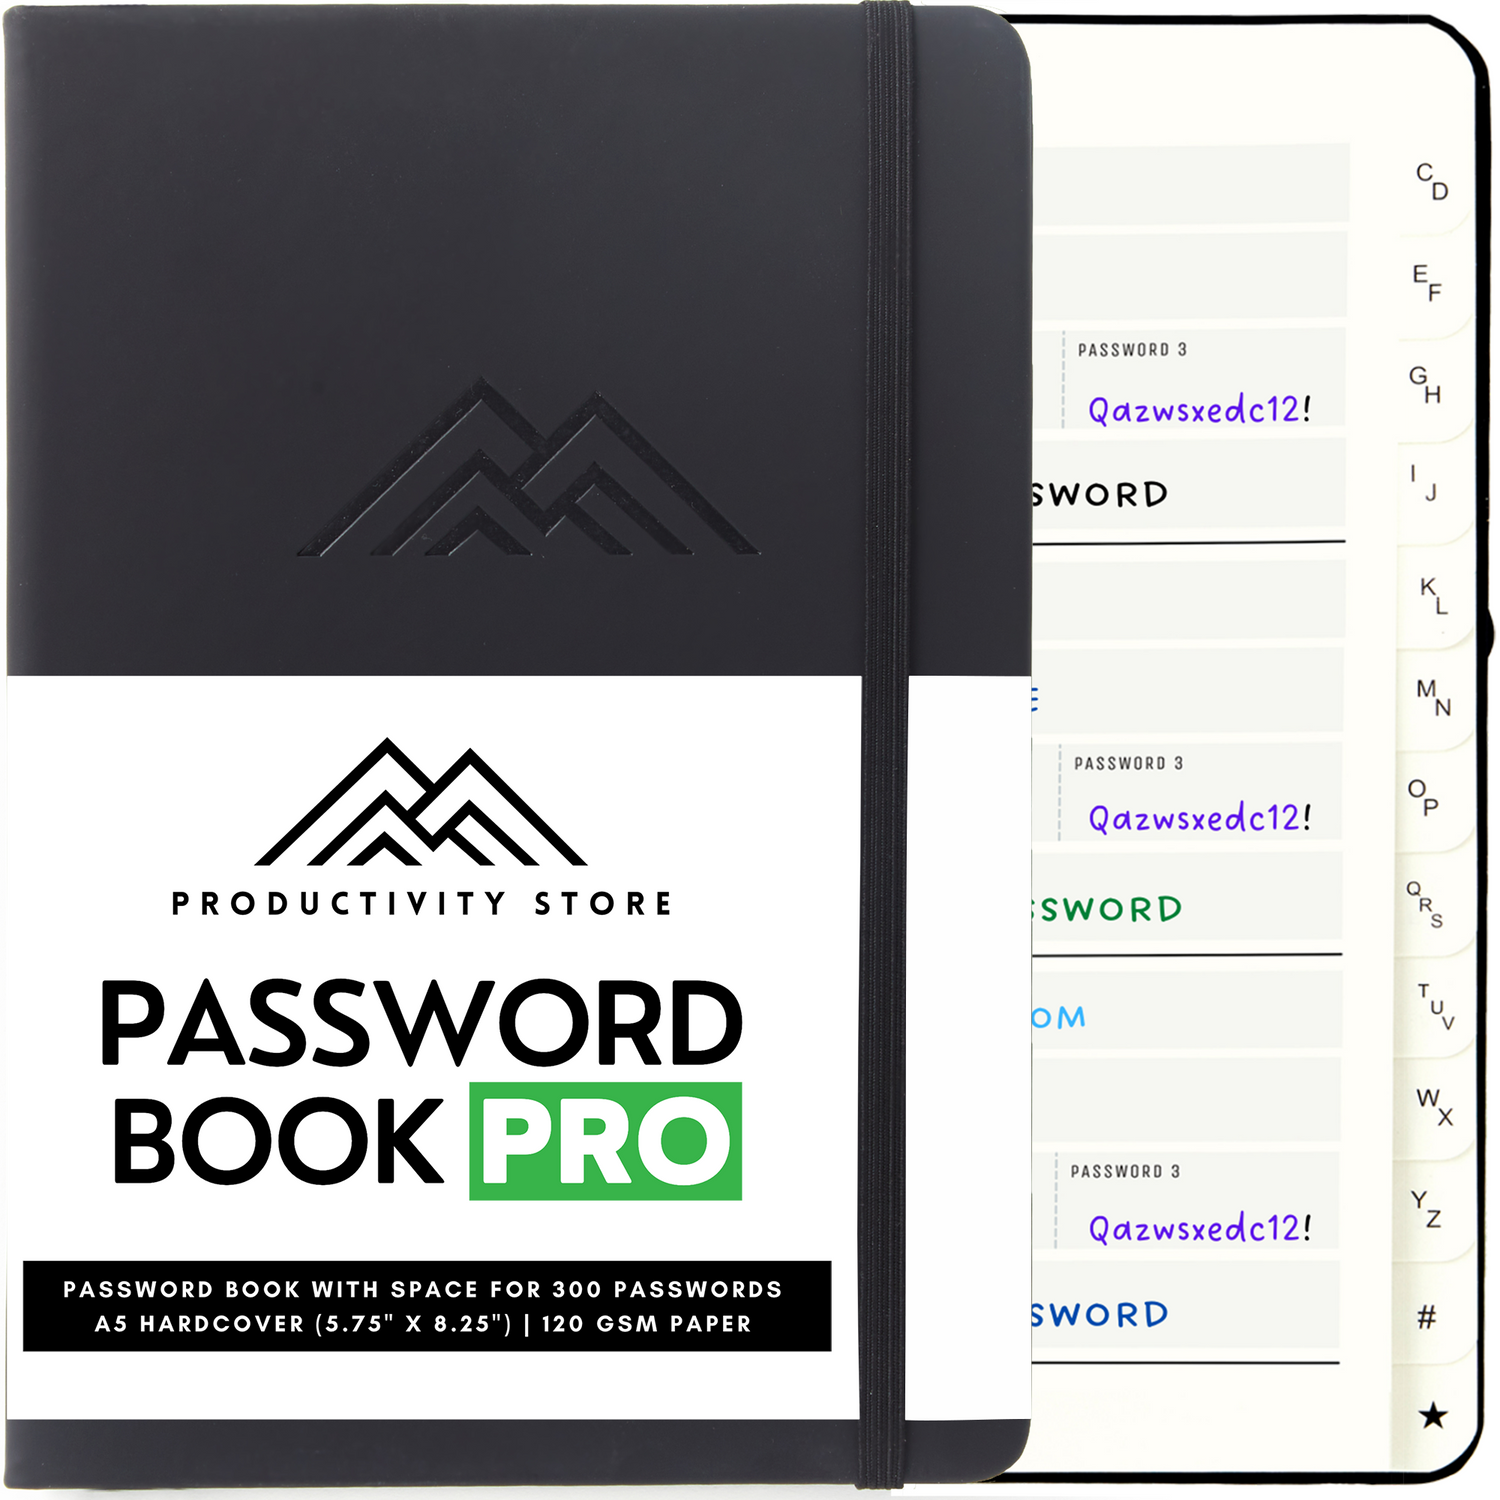 The Environmental Impact of Password Books